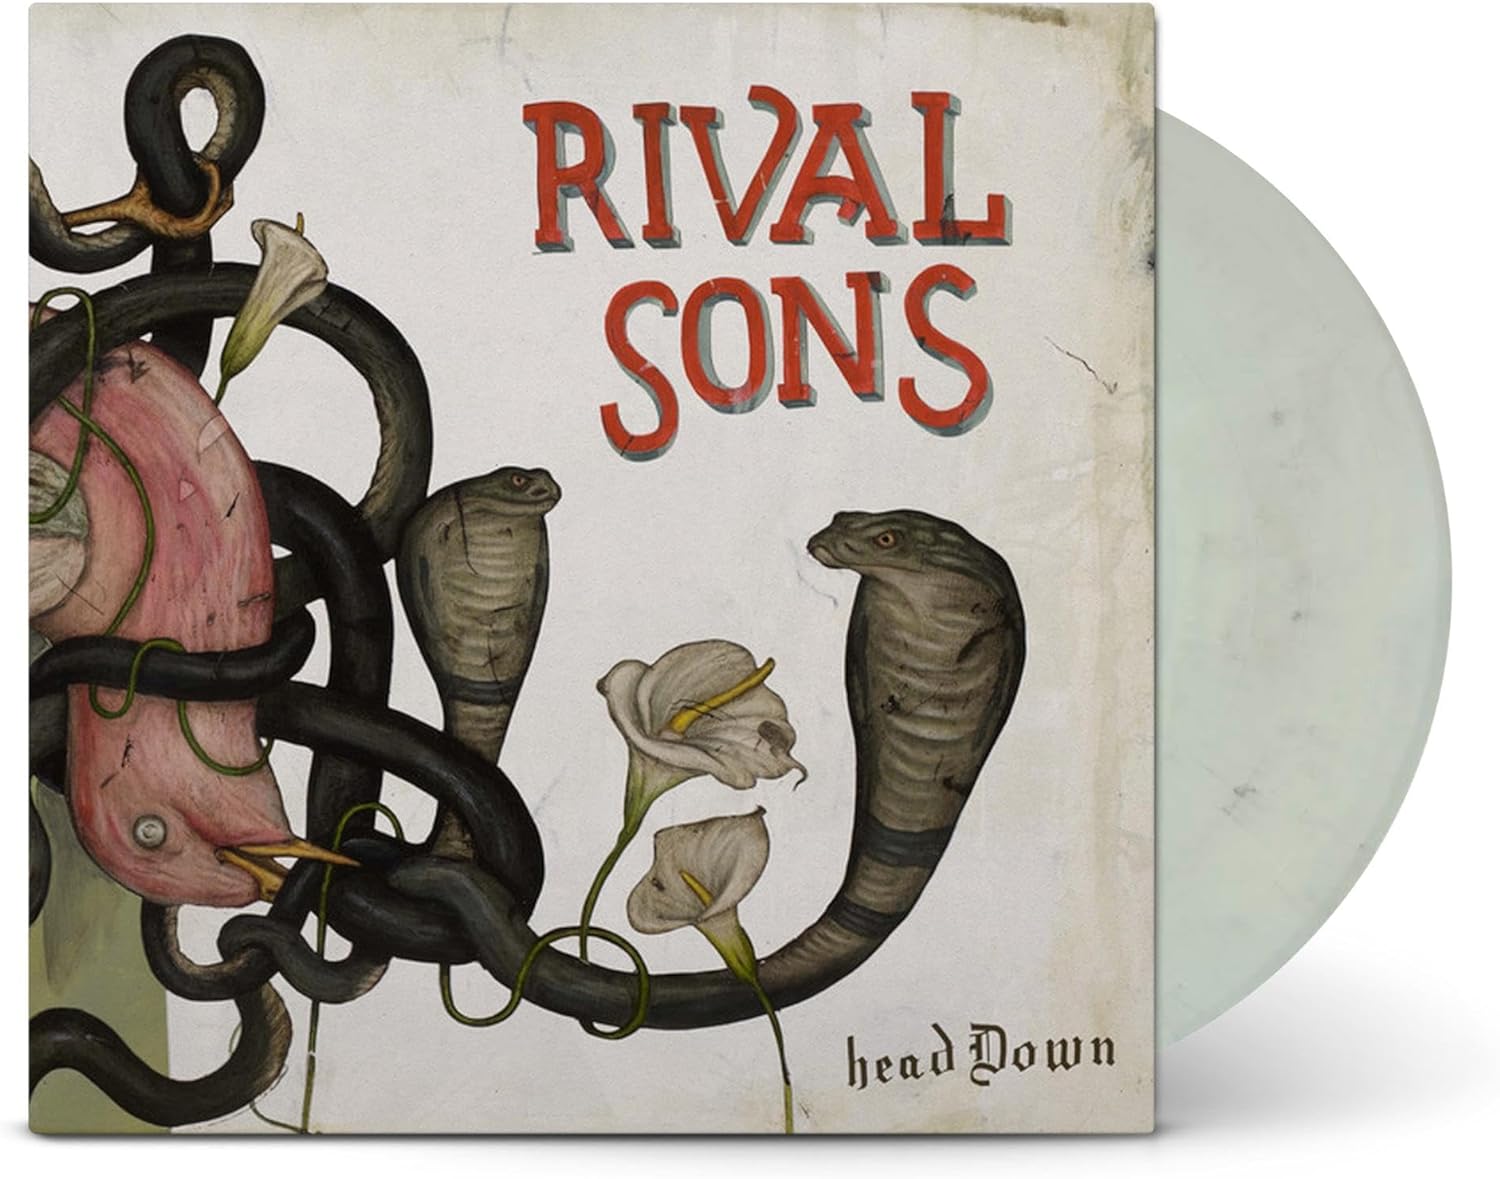 Rival Sons "Head Down" 2x12" Vinyl - PRE-ORDER